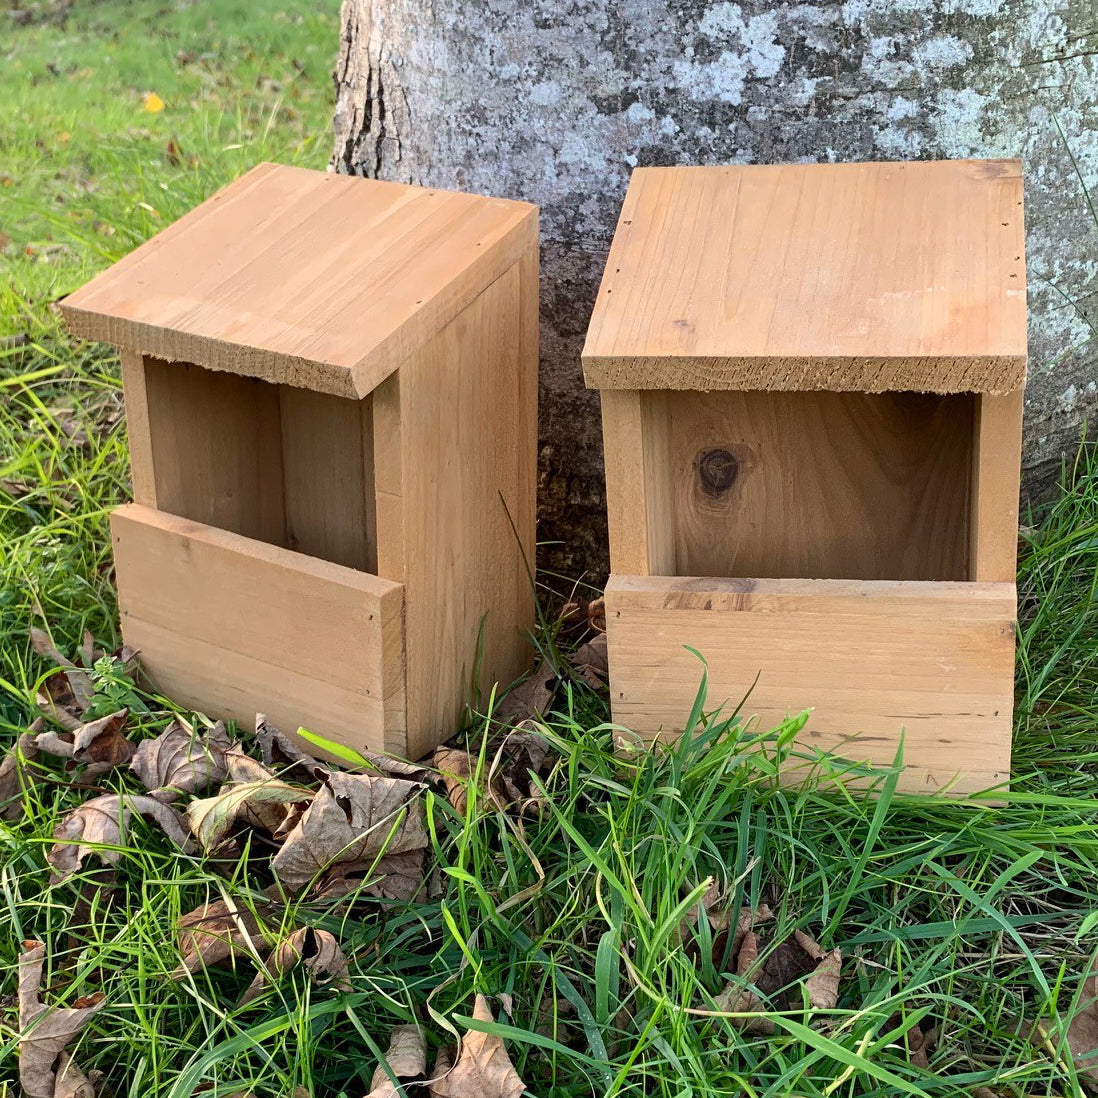 Wooden Robin Birdhouse Garden Nest Boxes (Set of 4)